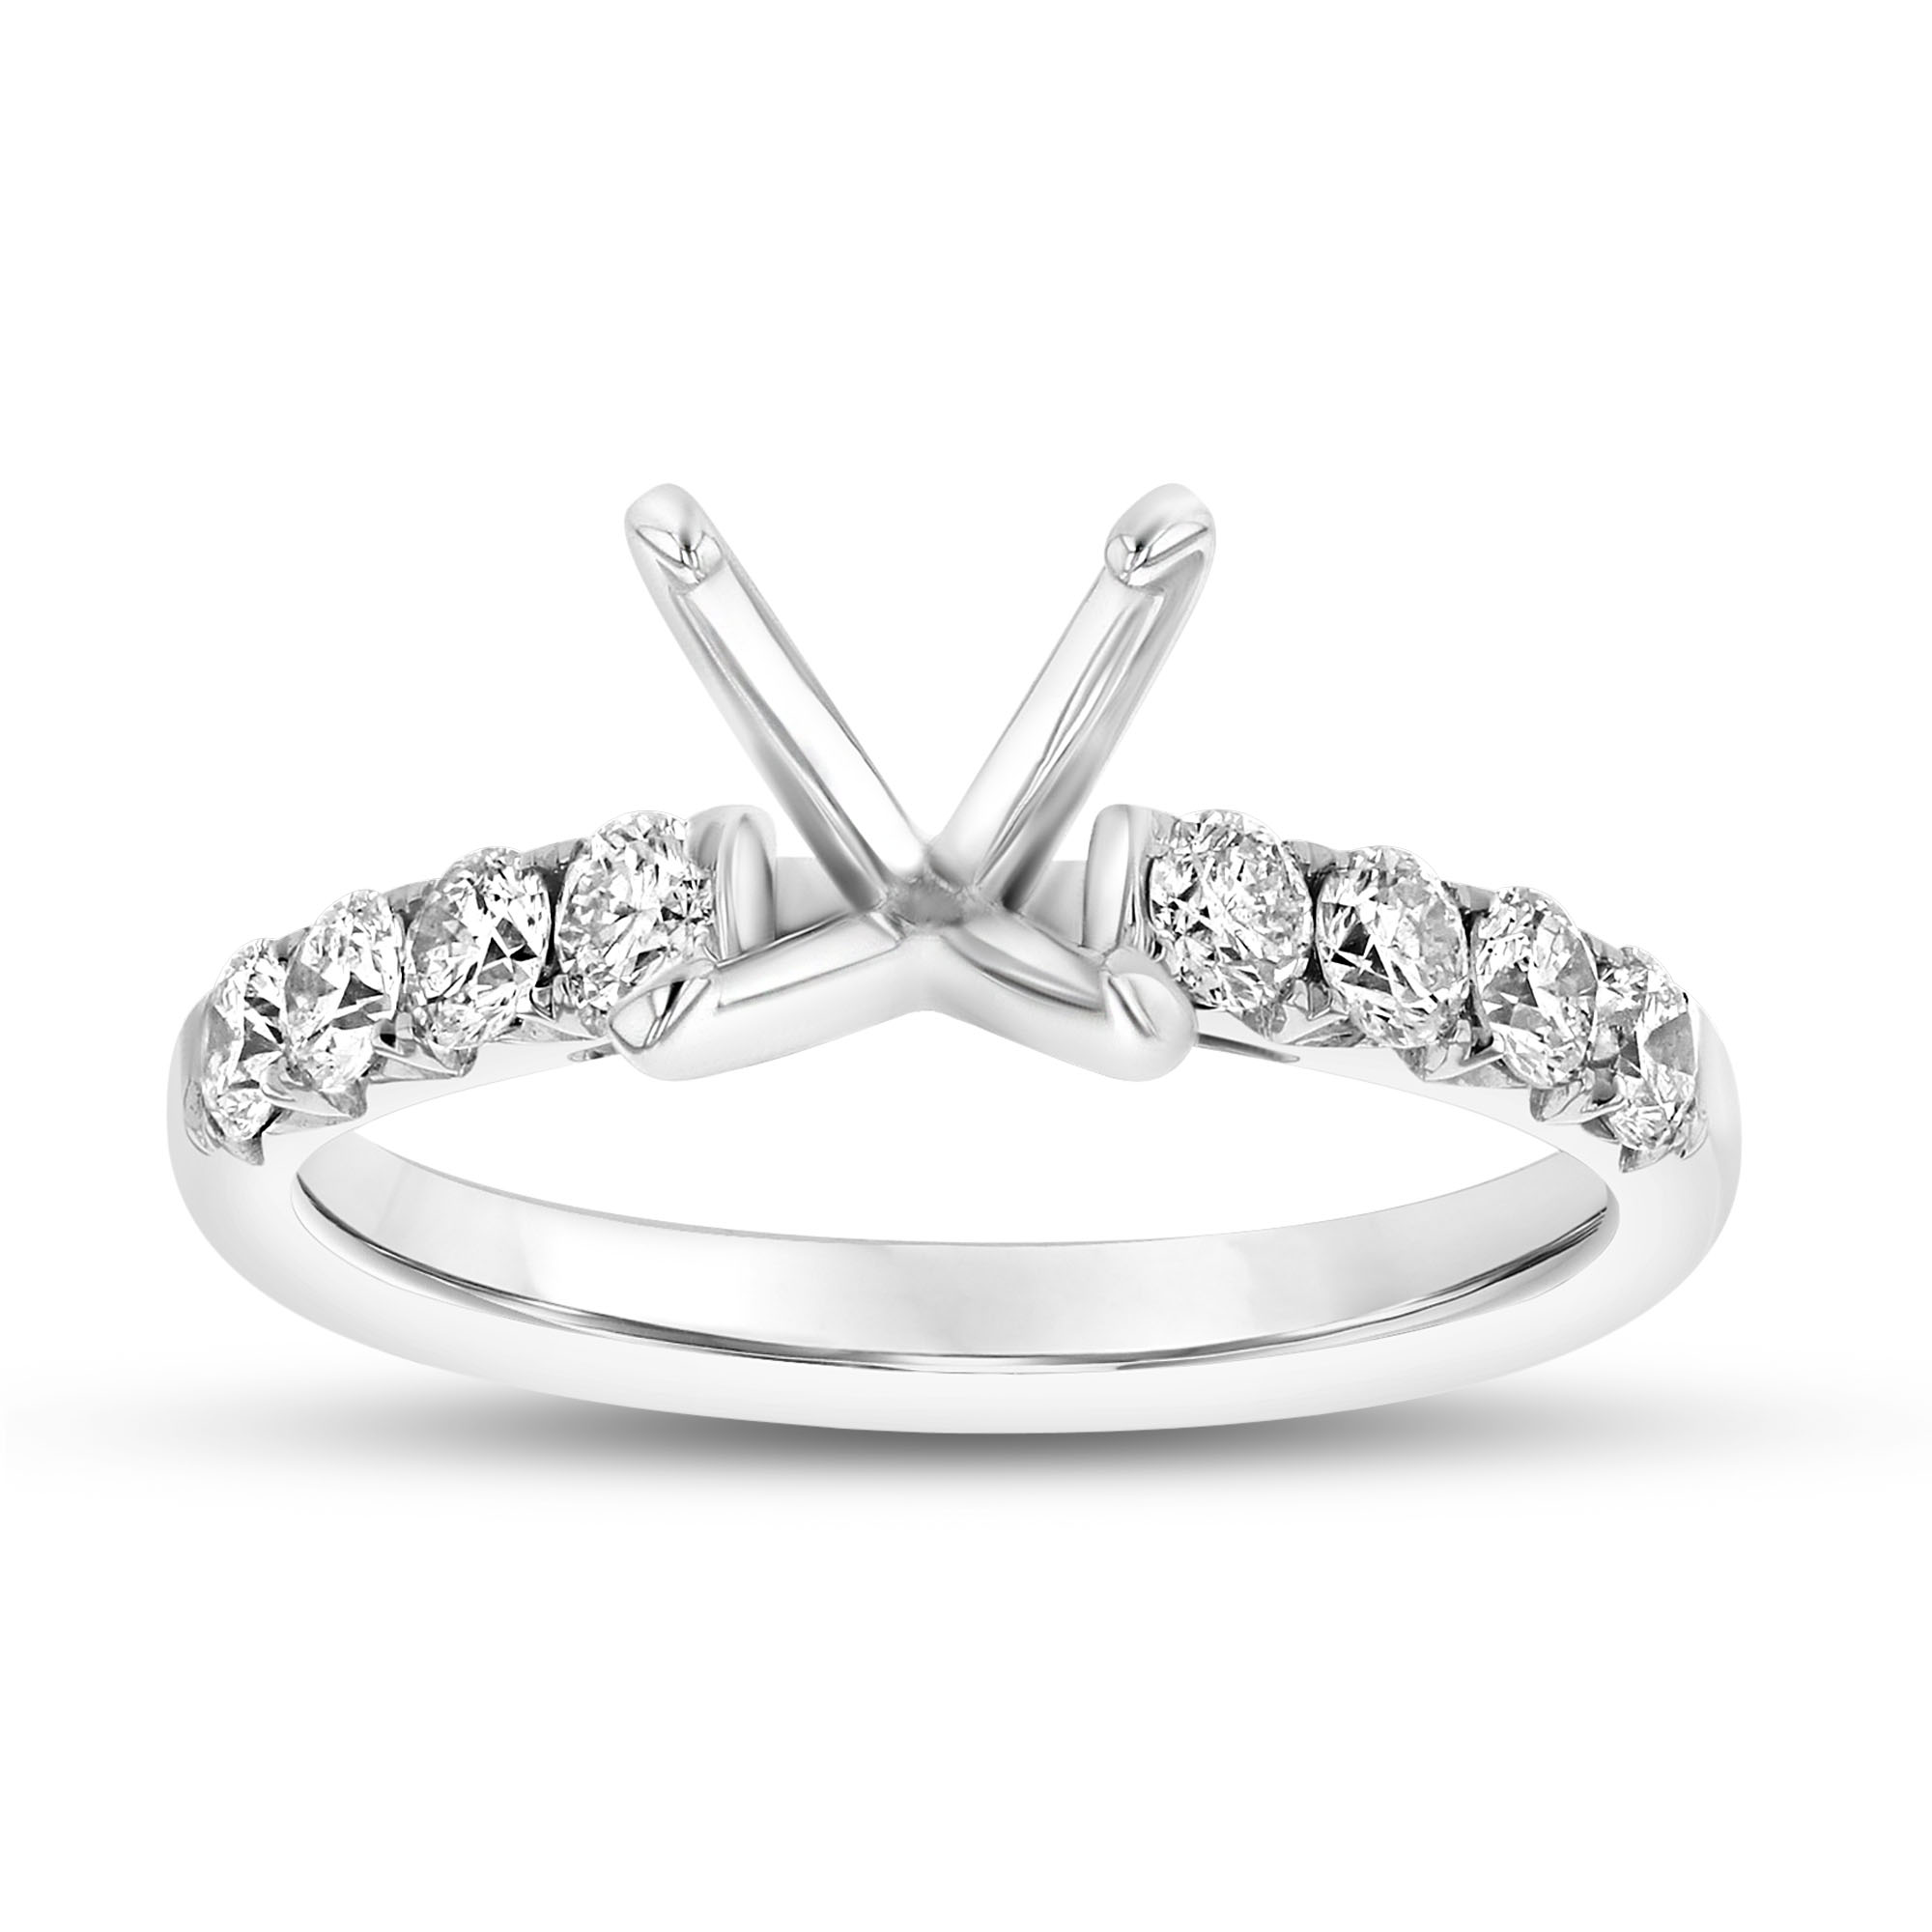 0.60ctw Diamond Semi Mount Engagement Ring in 18k White Gold